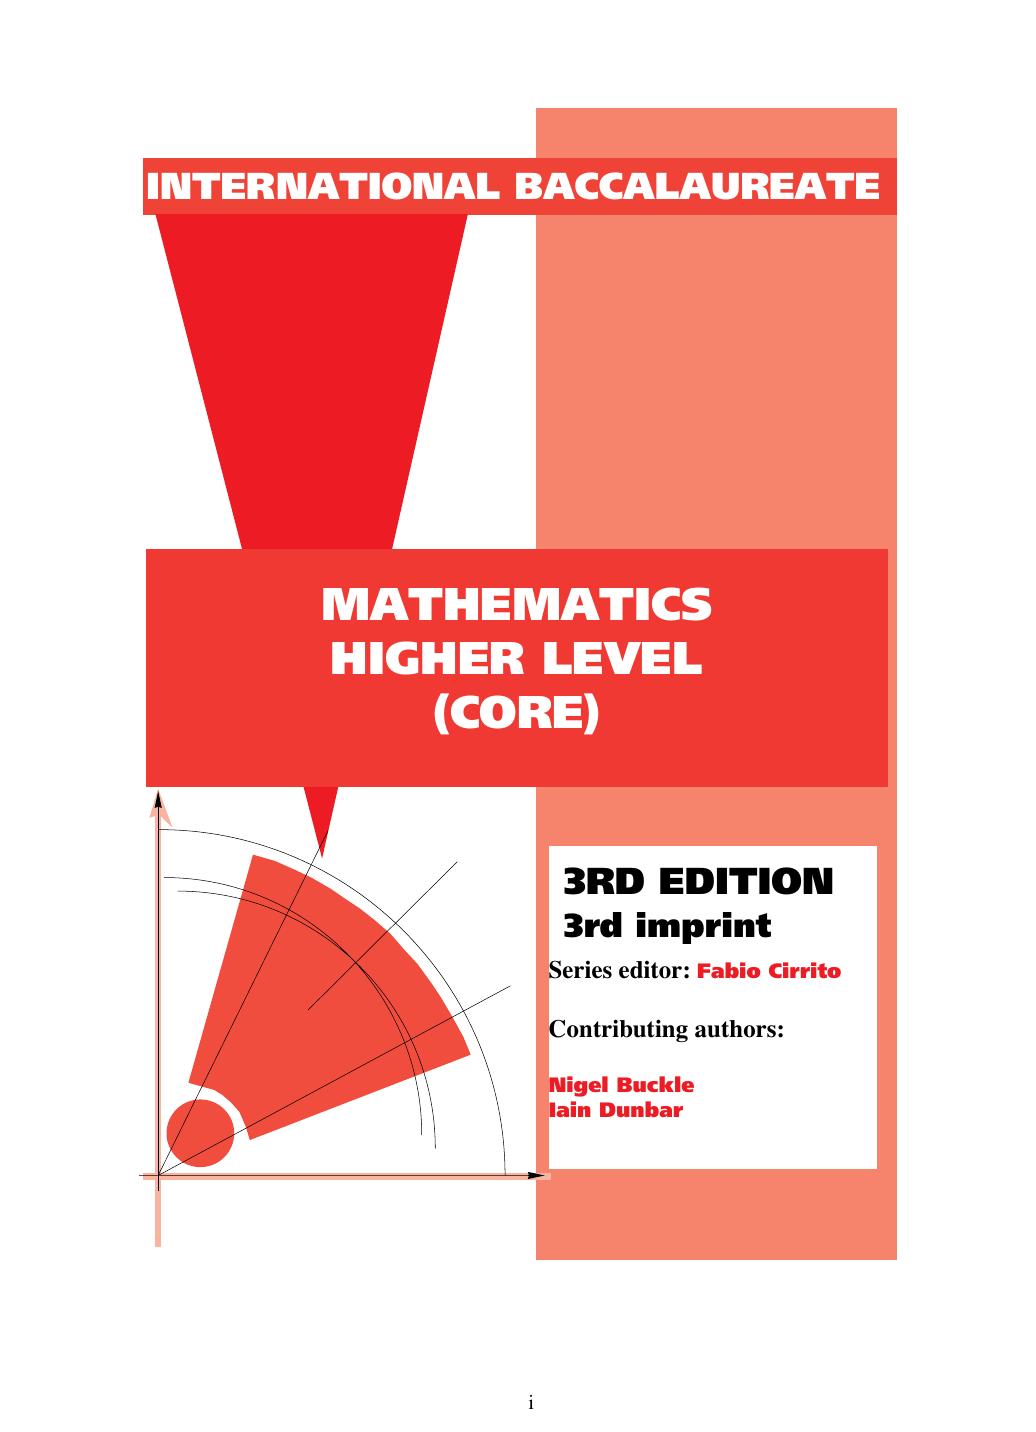 Mathematics Higher Level (core) 2007